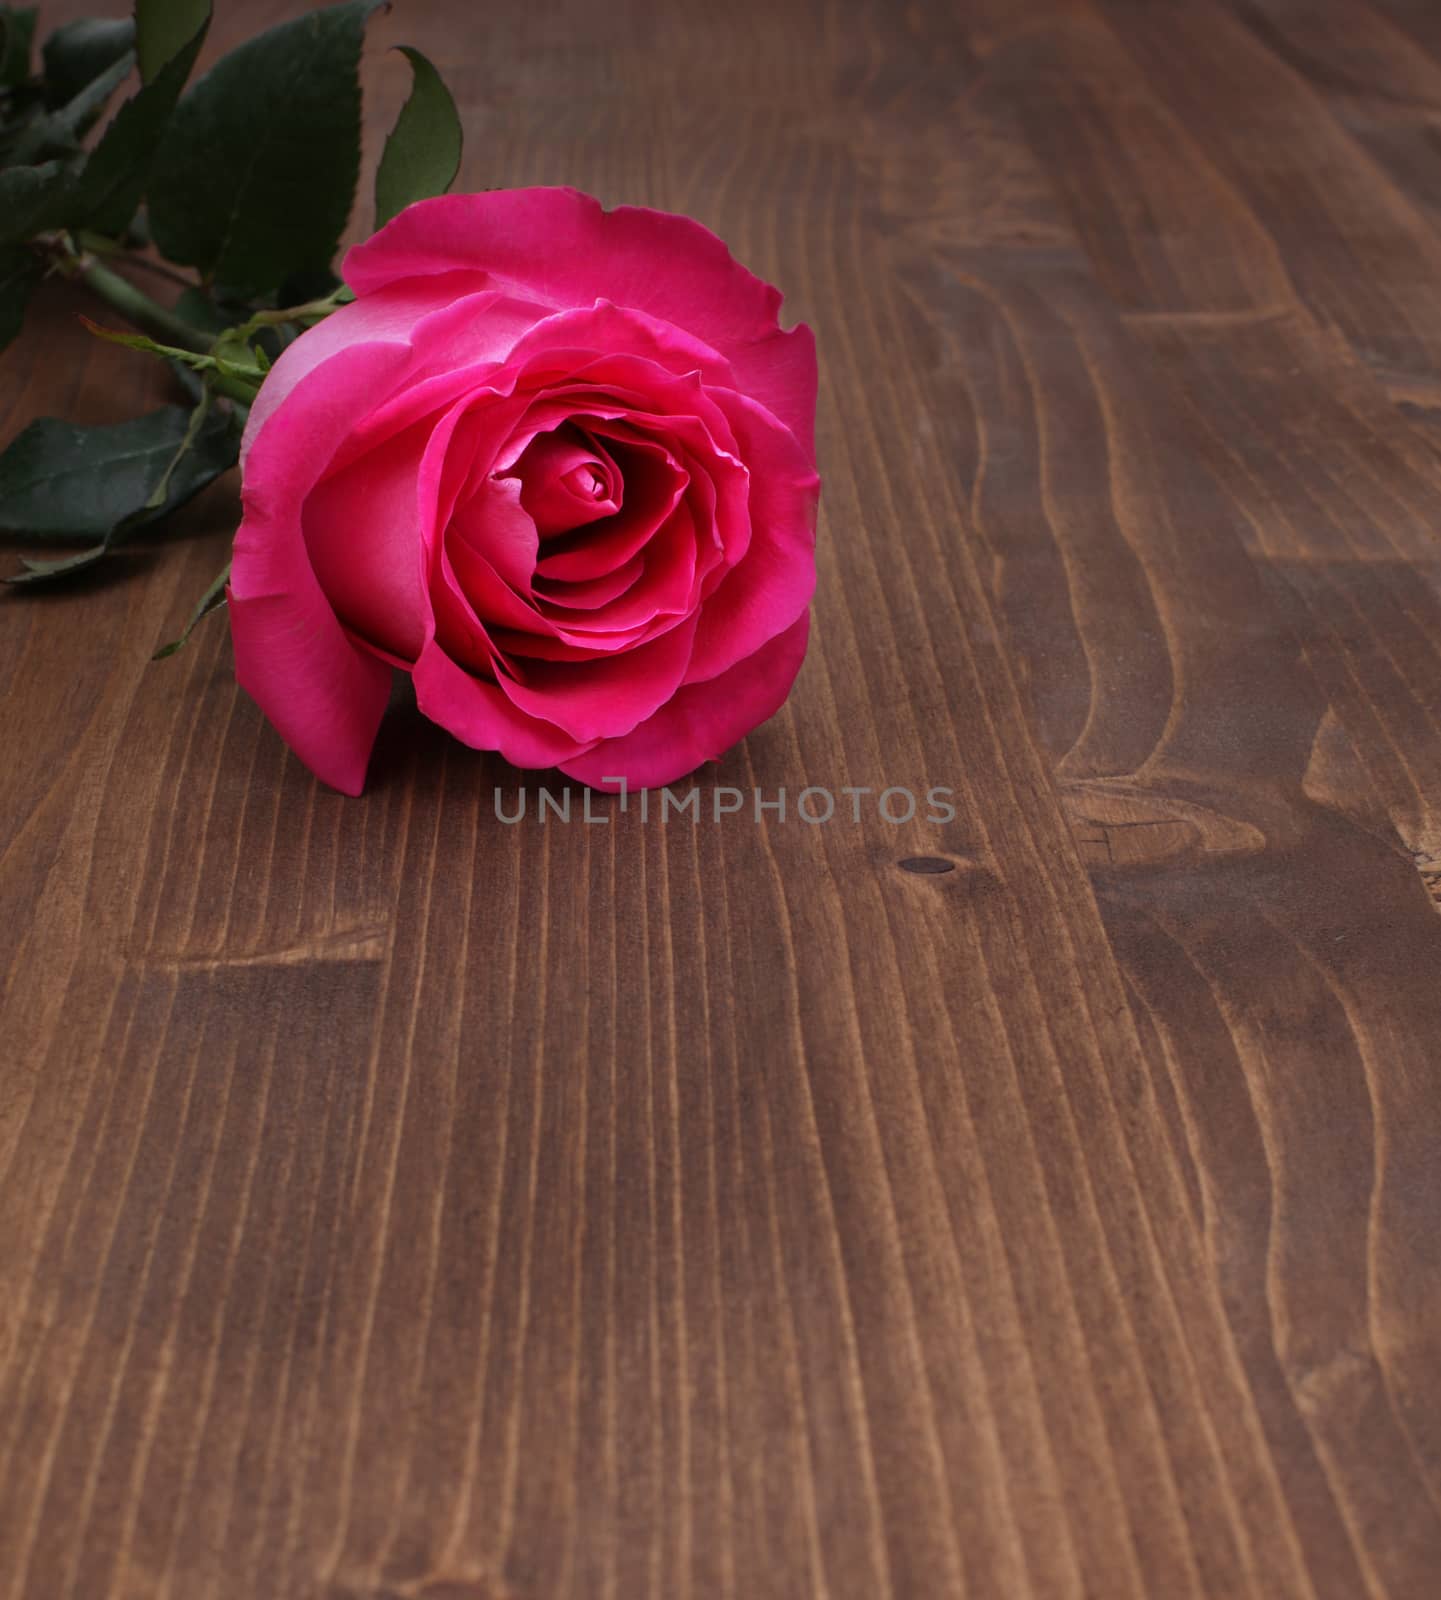 rose on wood background by rudchenko